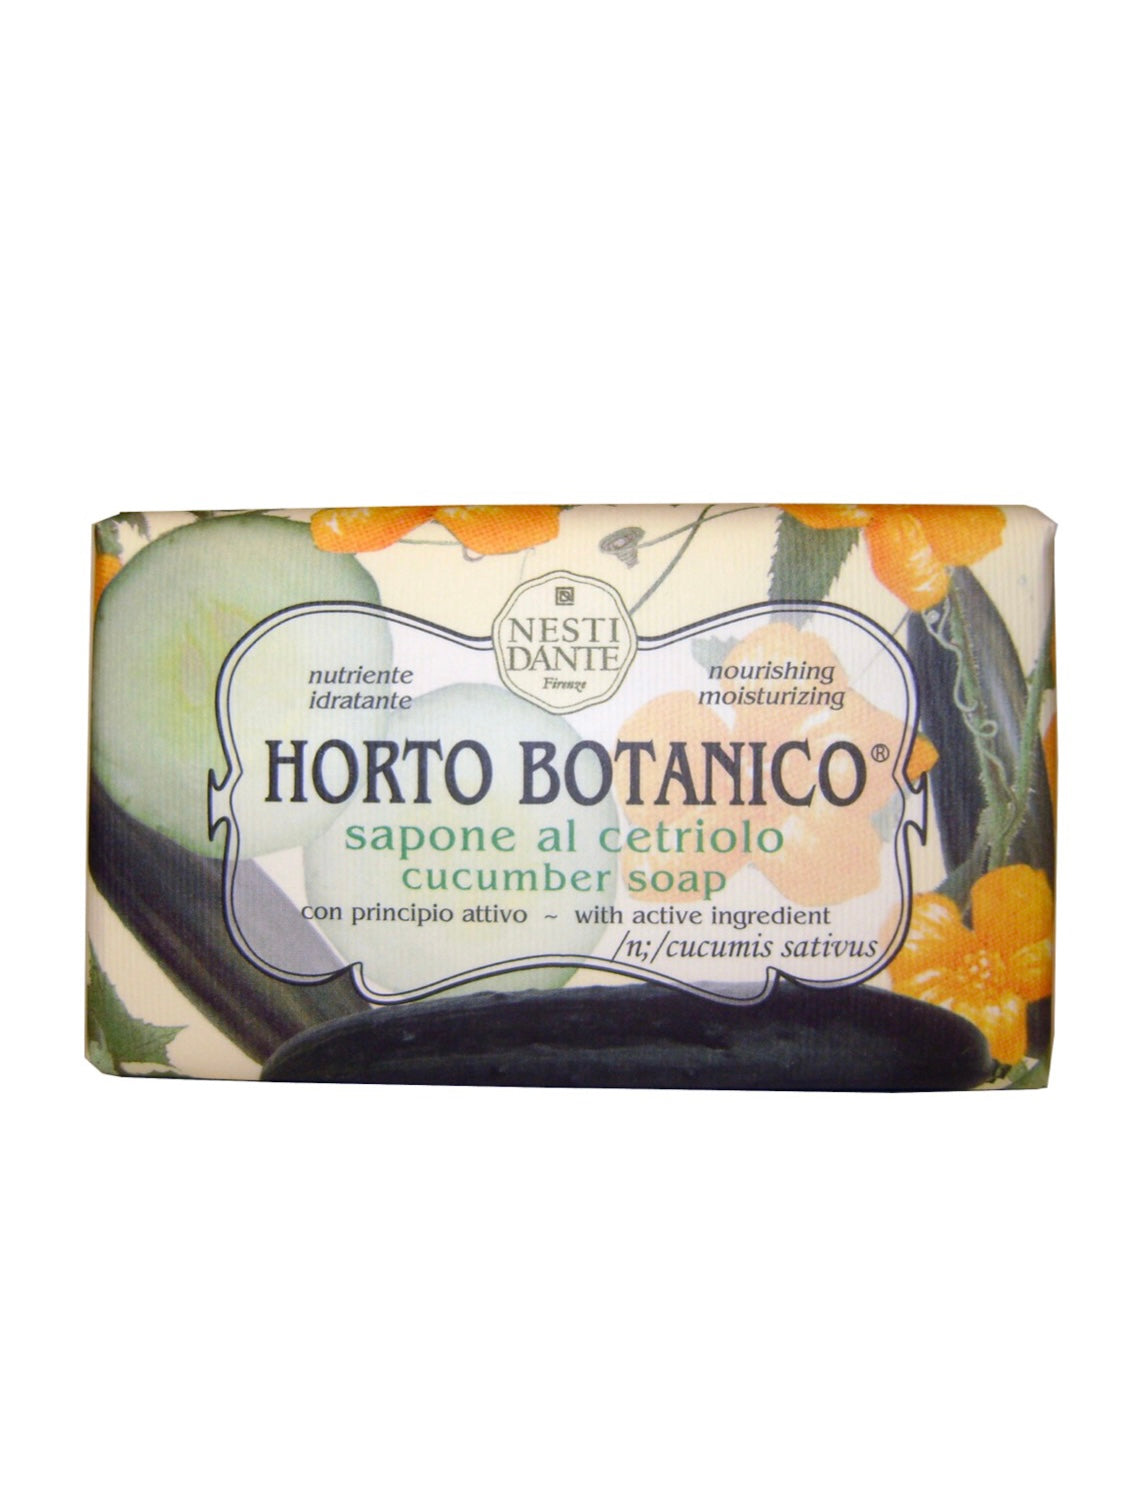 Nesti Dante Horto Botanico Cucumber Soap